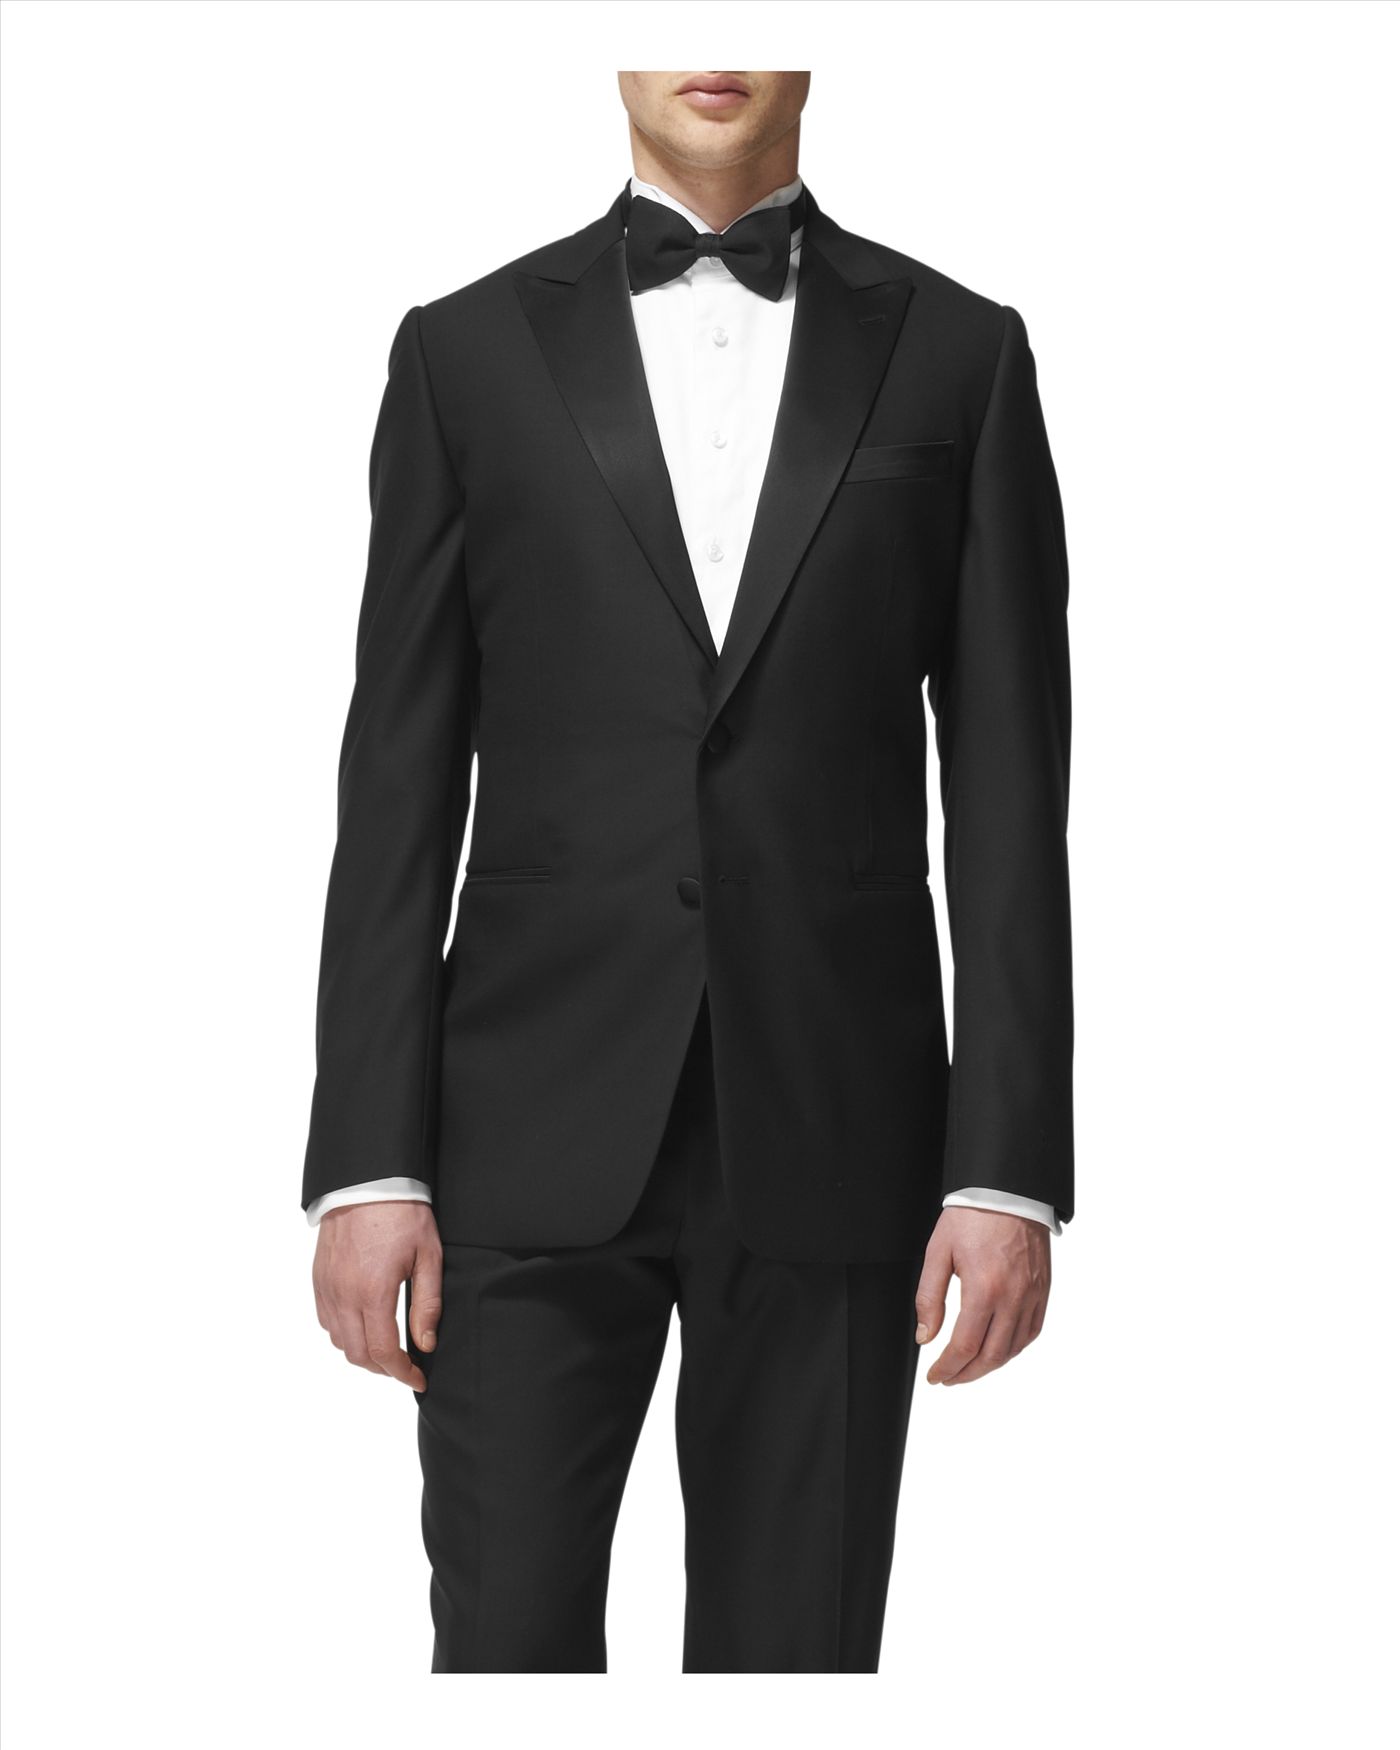 Jaeger Dinner Suit in Black for Men - Lyst